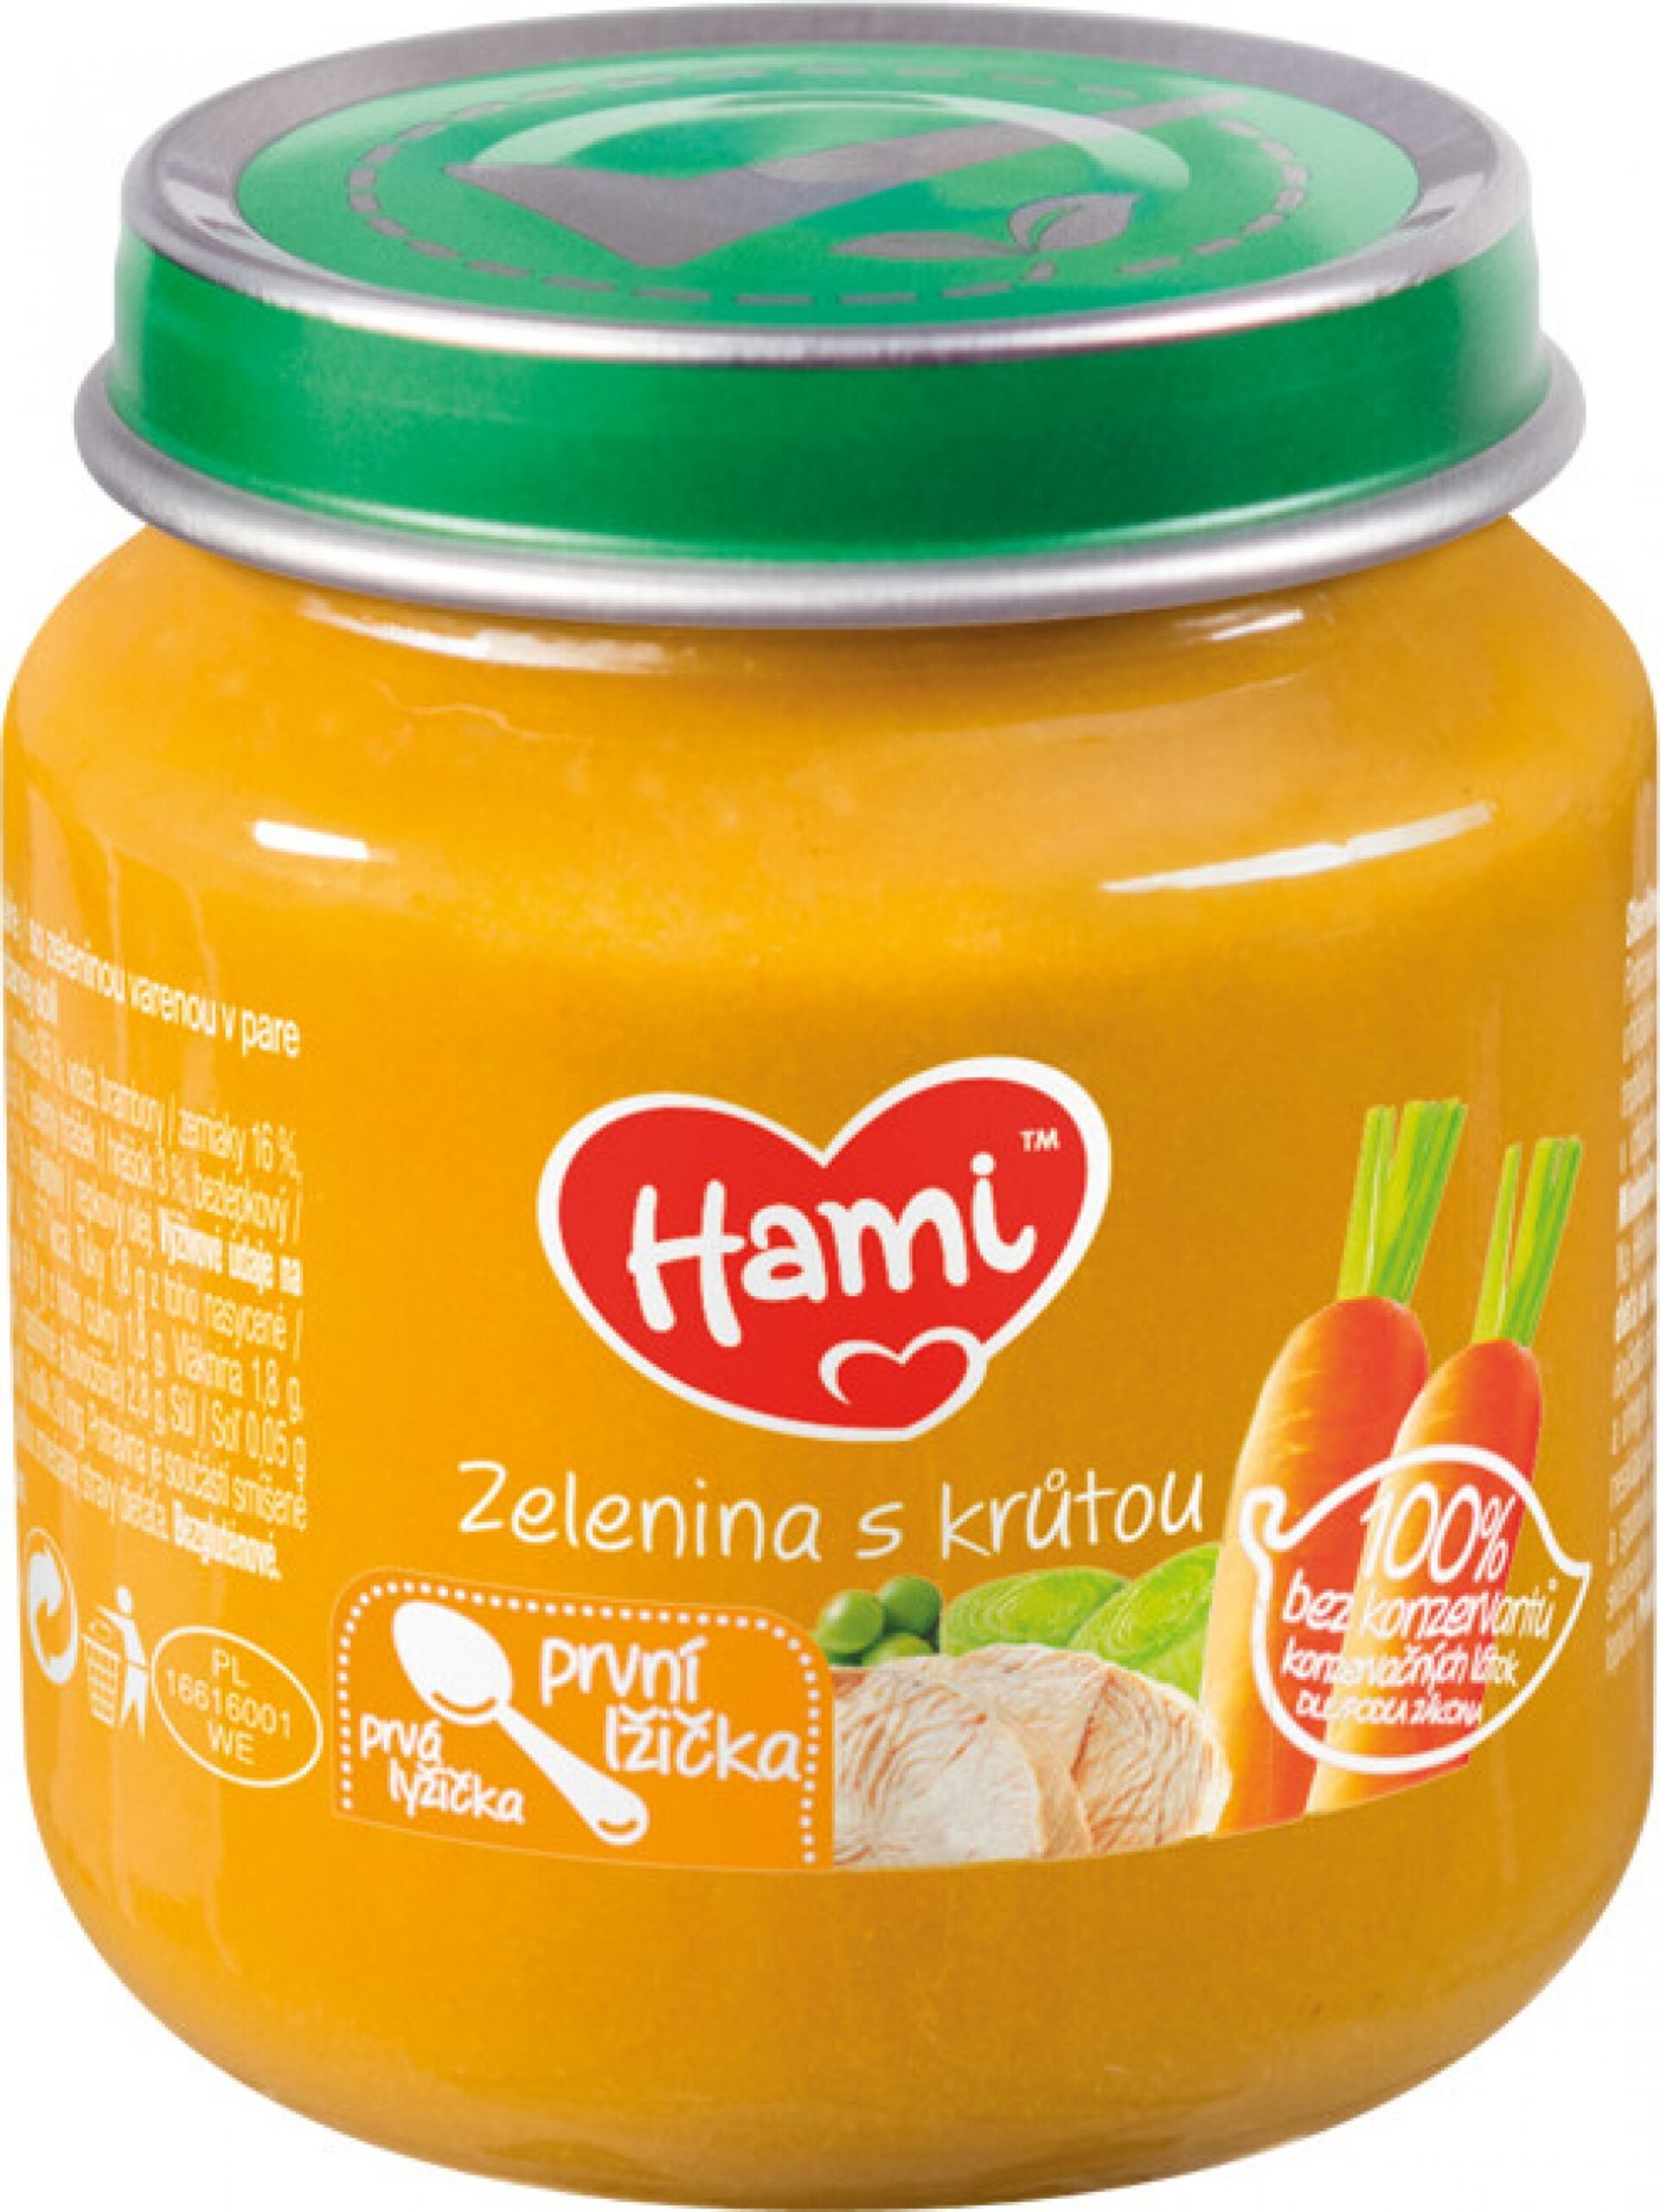 E-shop Hami Mäsozeleninový príkrm Zelenina s morkou 125 g